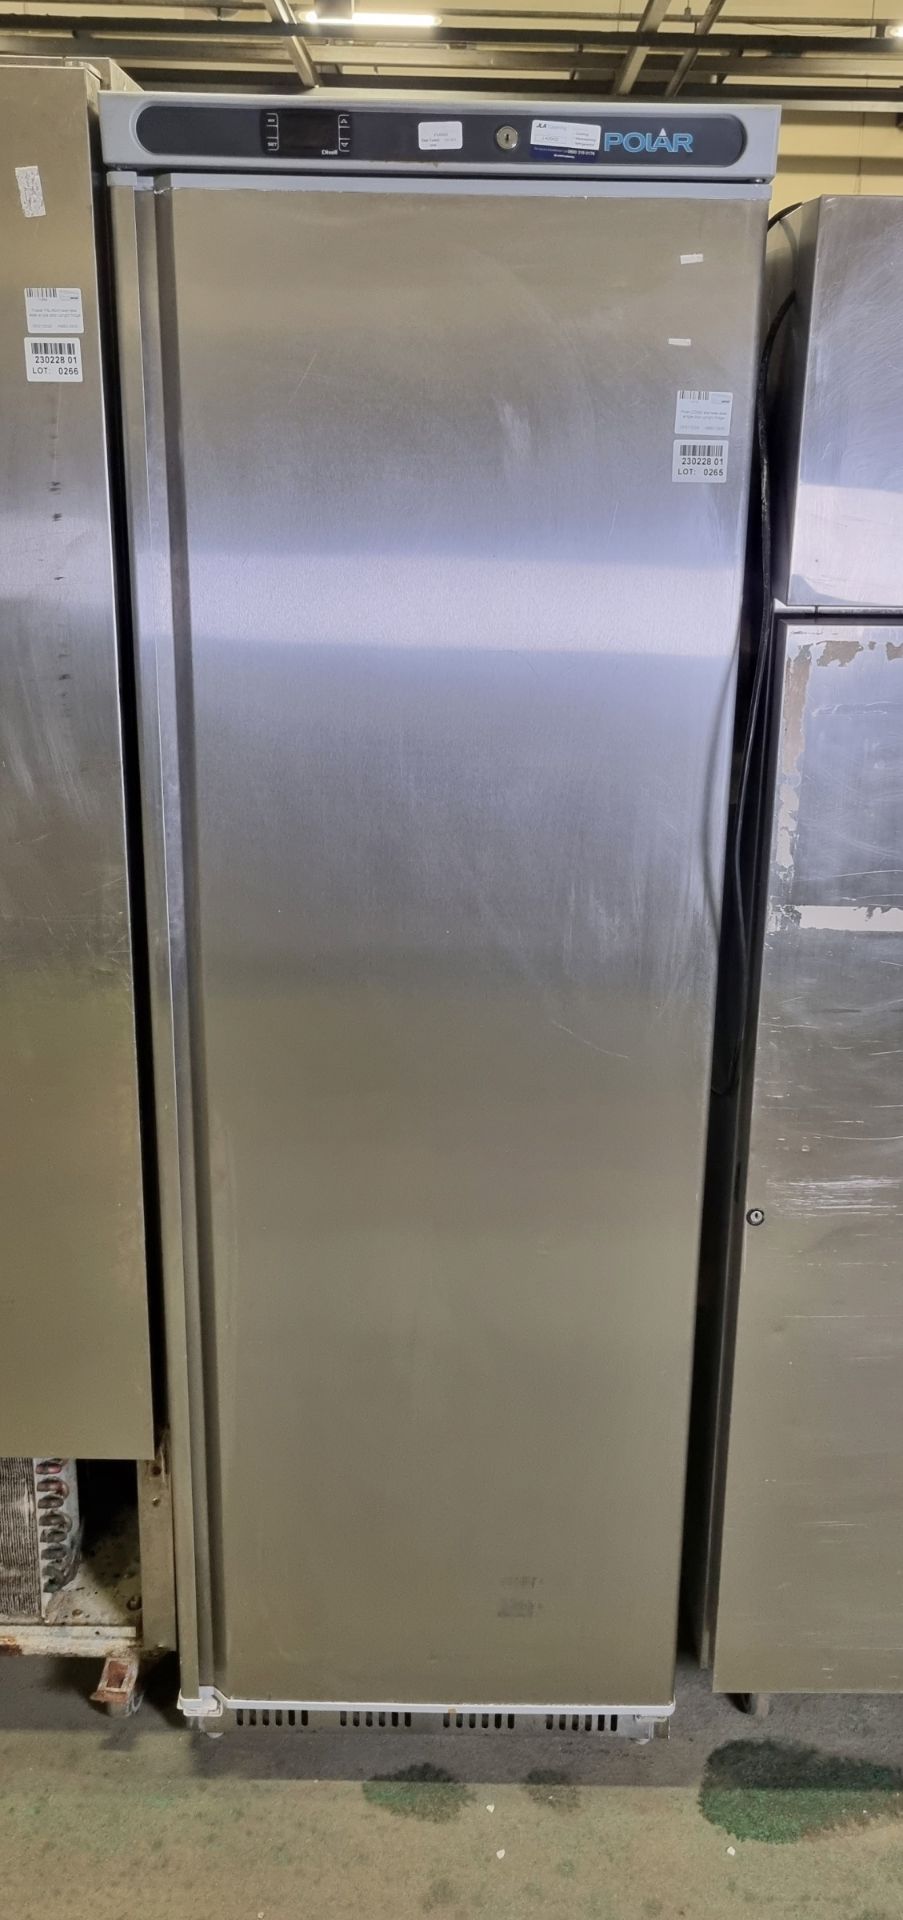 Polar CD082 stainless steel single door upright fridge